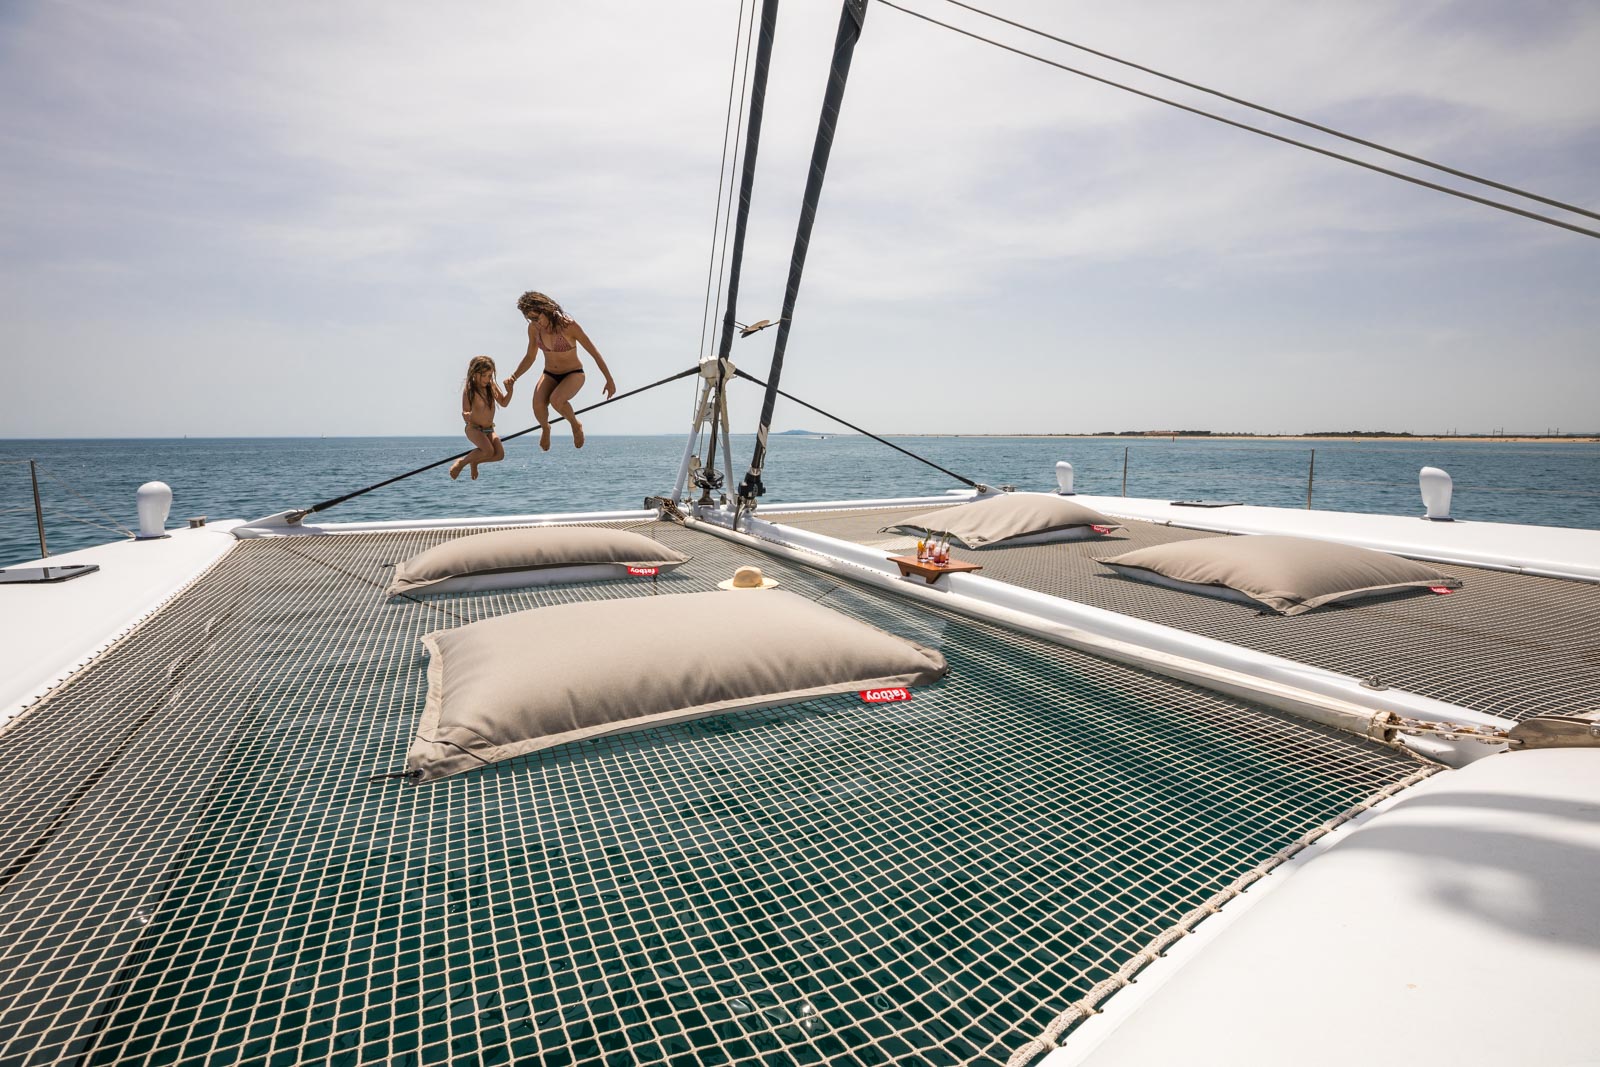 Magic cat catamaran yacht charter luxury fast sailing